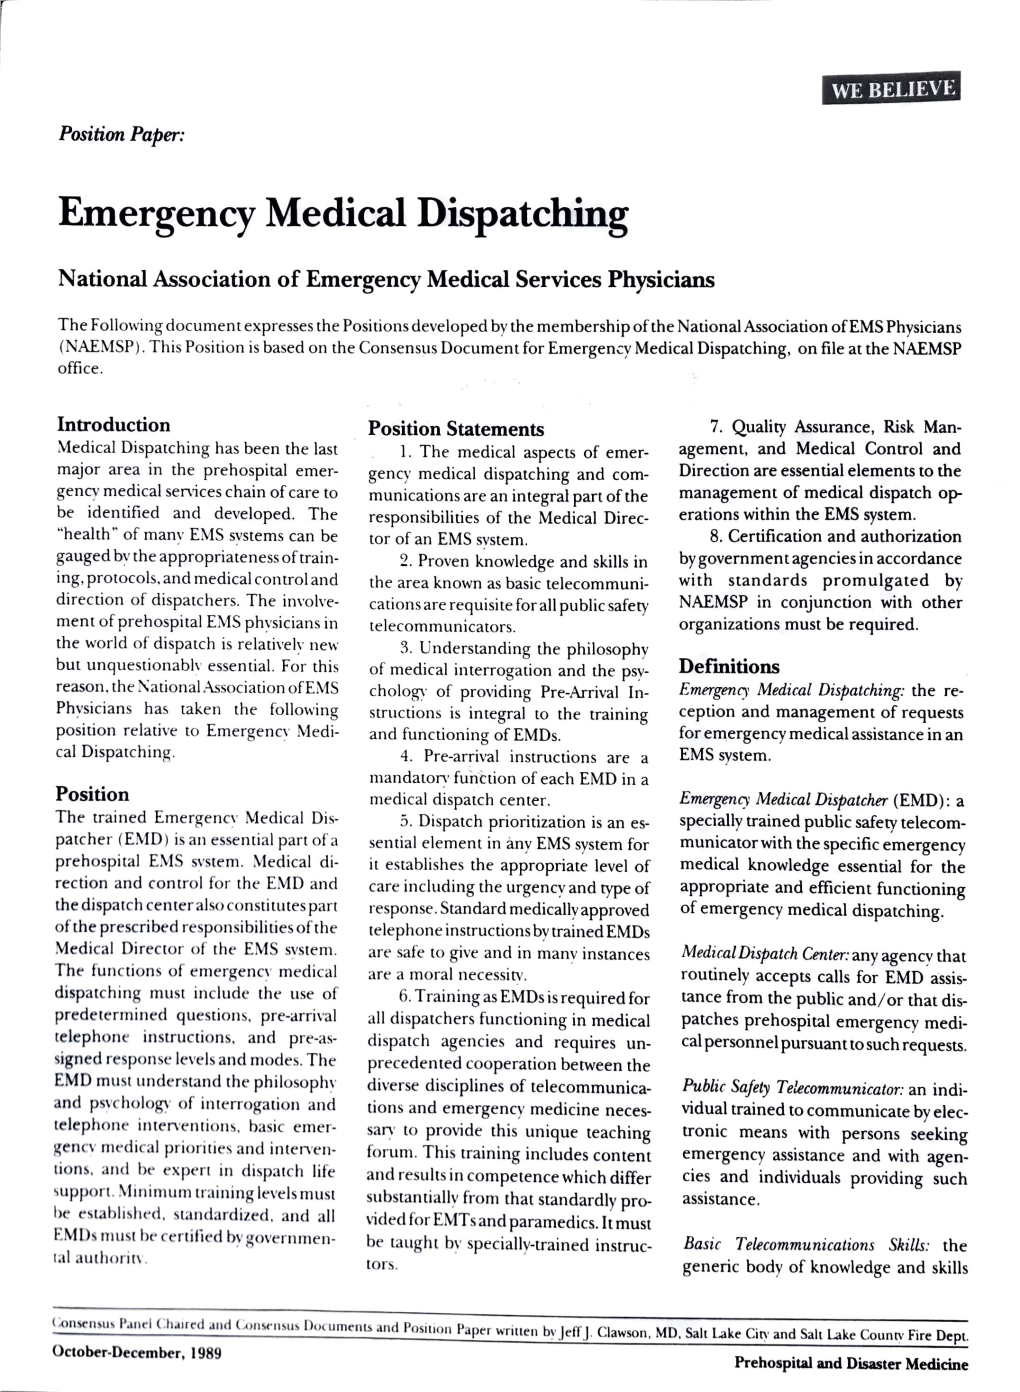 Emergency Medical Dispatching